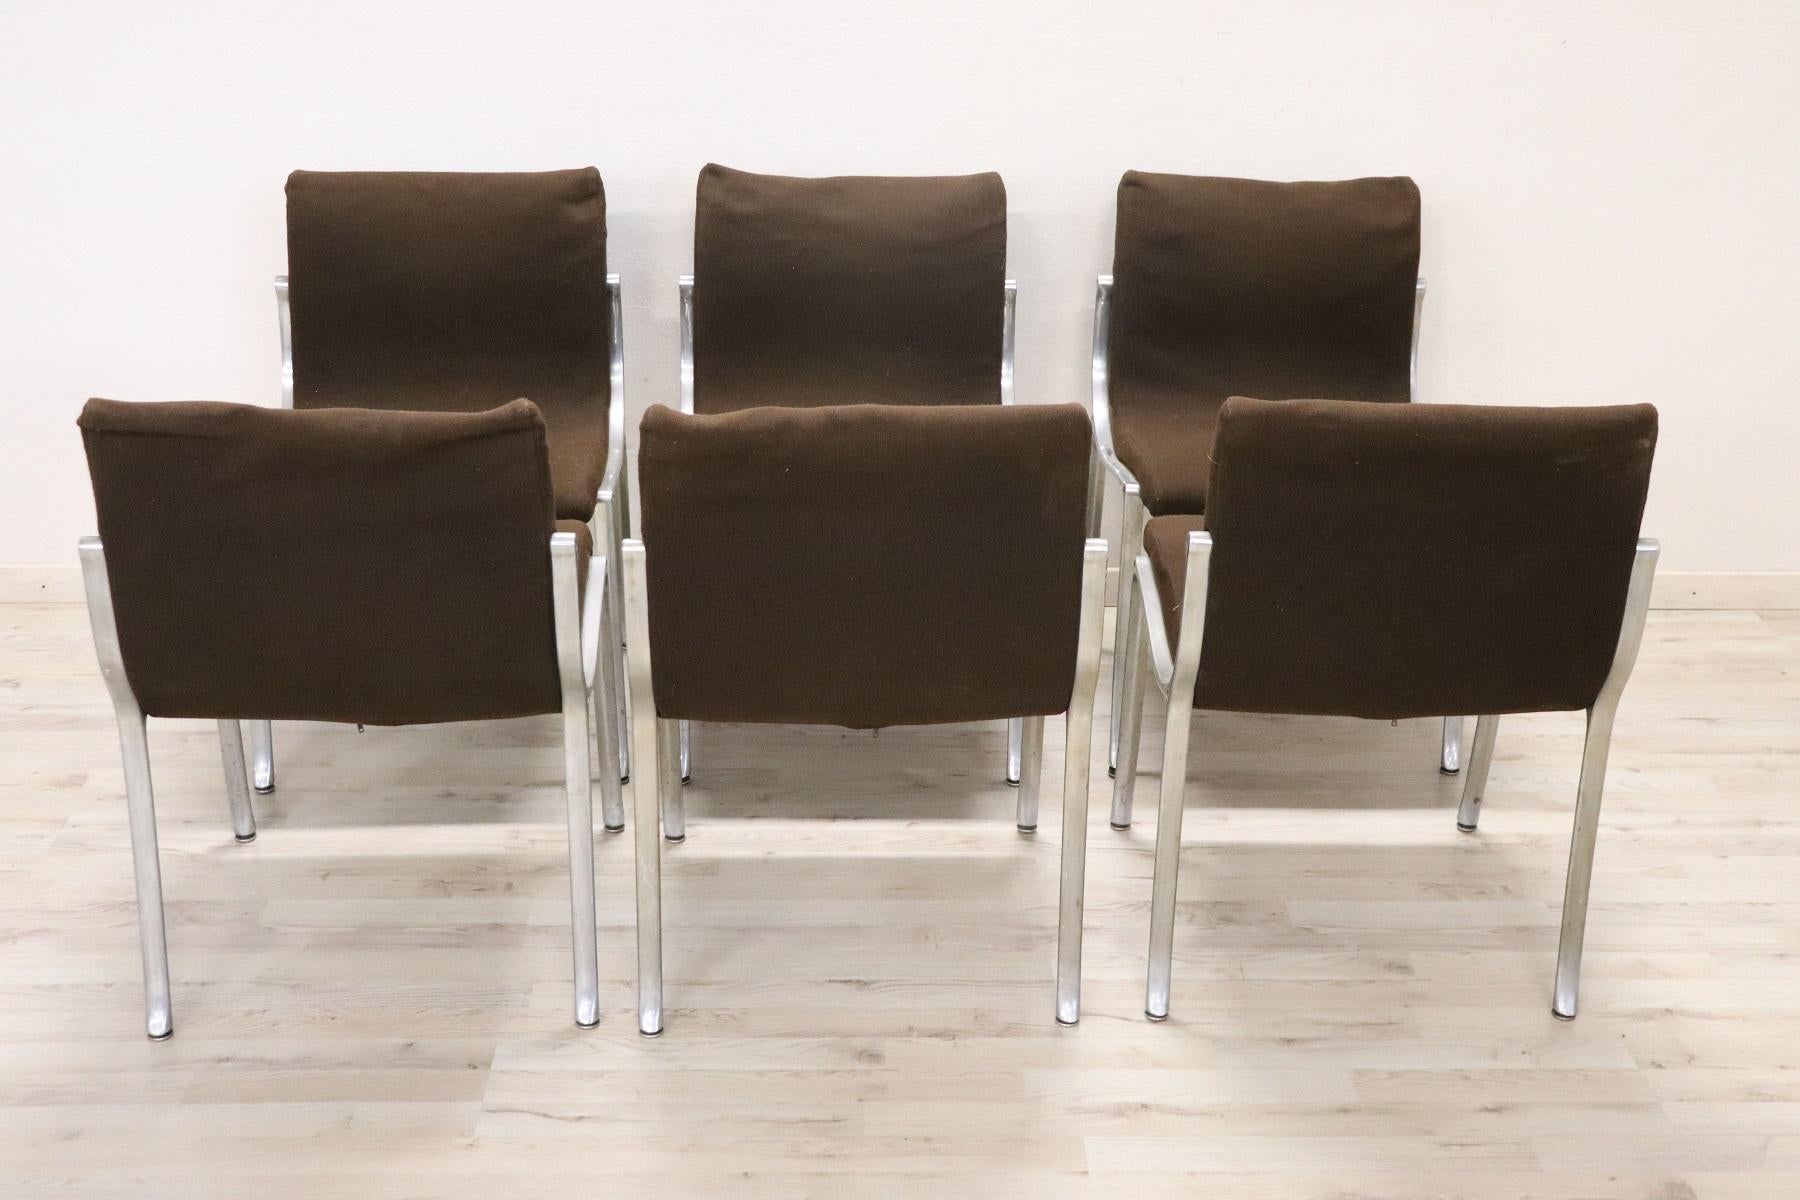 20th Century Italian Design in the Style of Osvaldo Borsani Chairs, Set of 6 For Sale 2